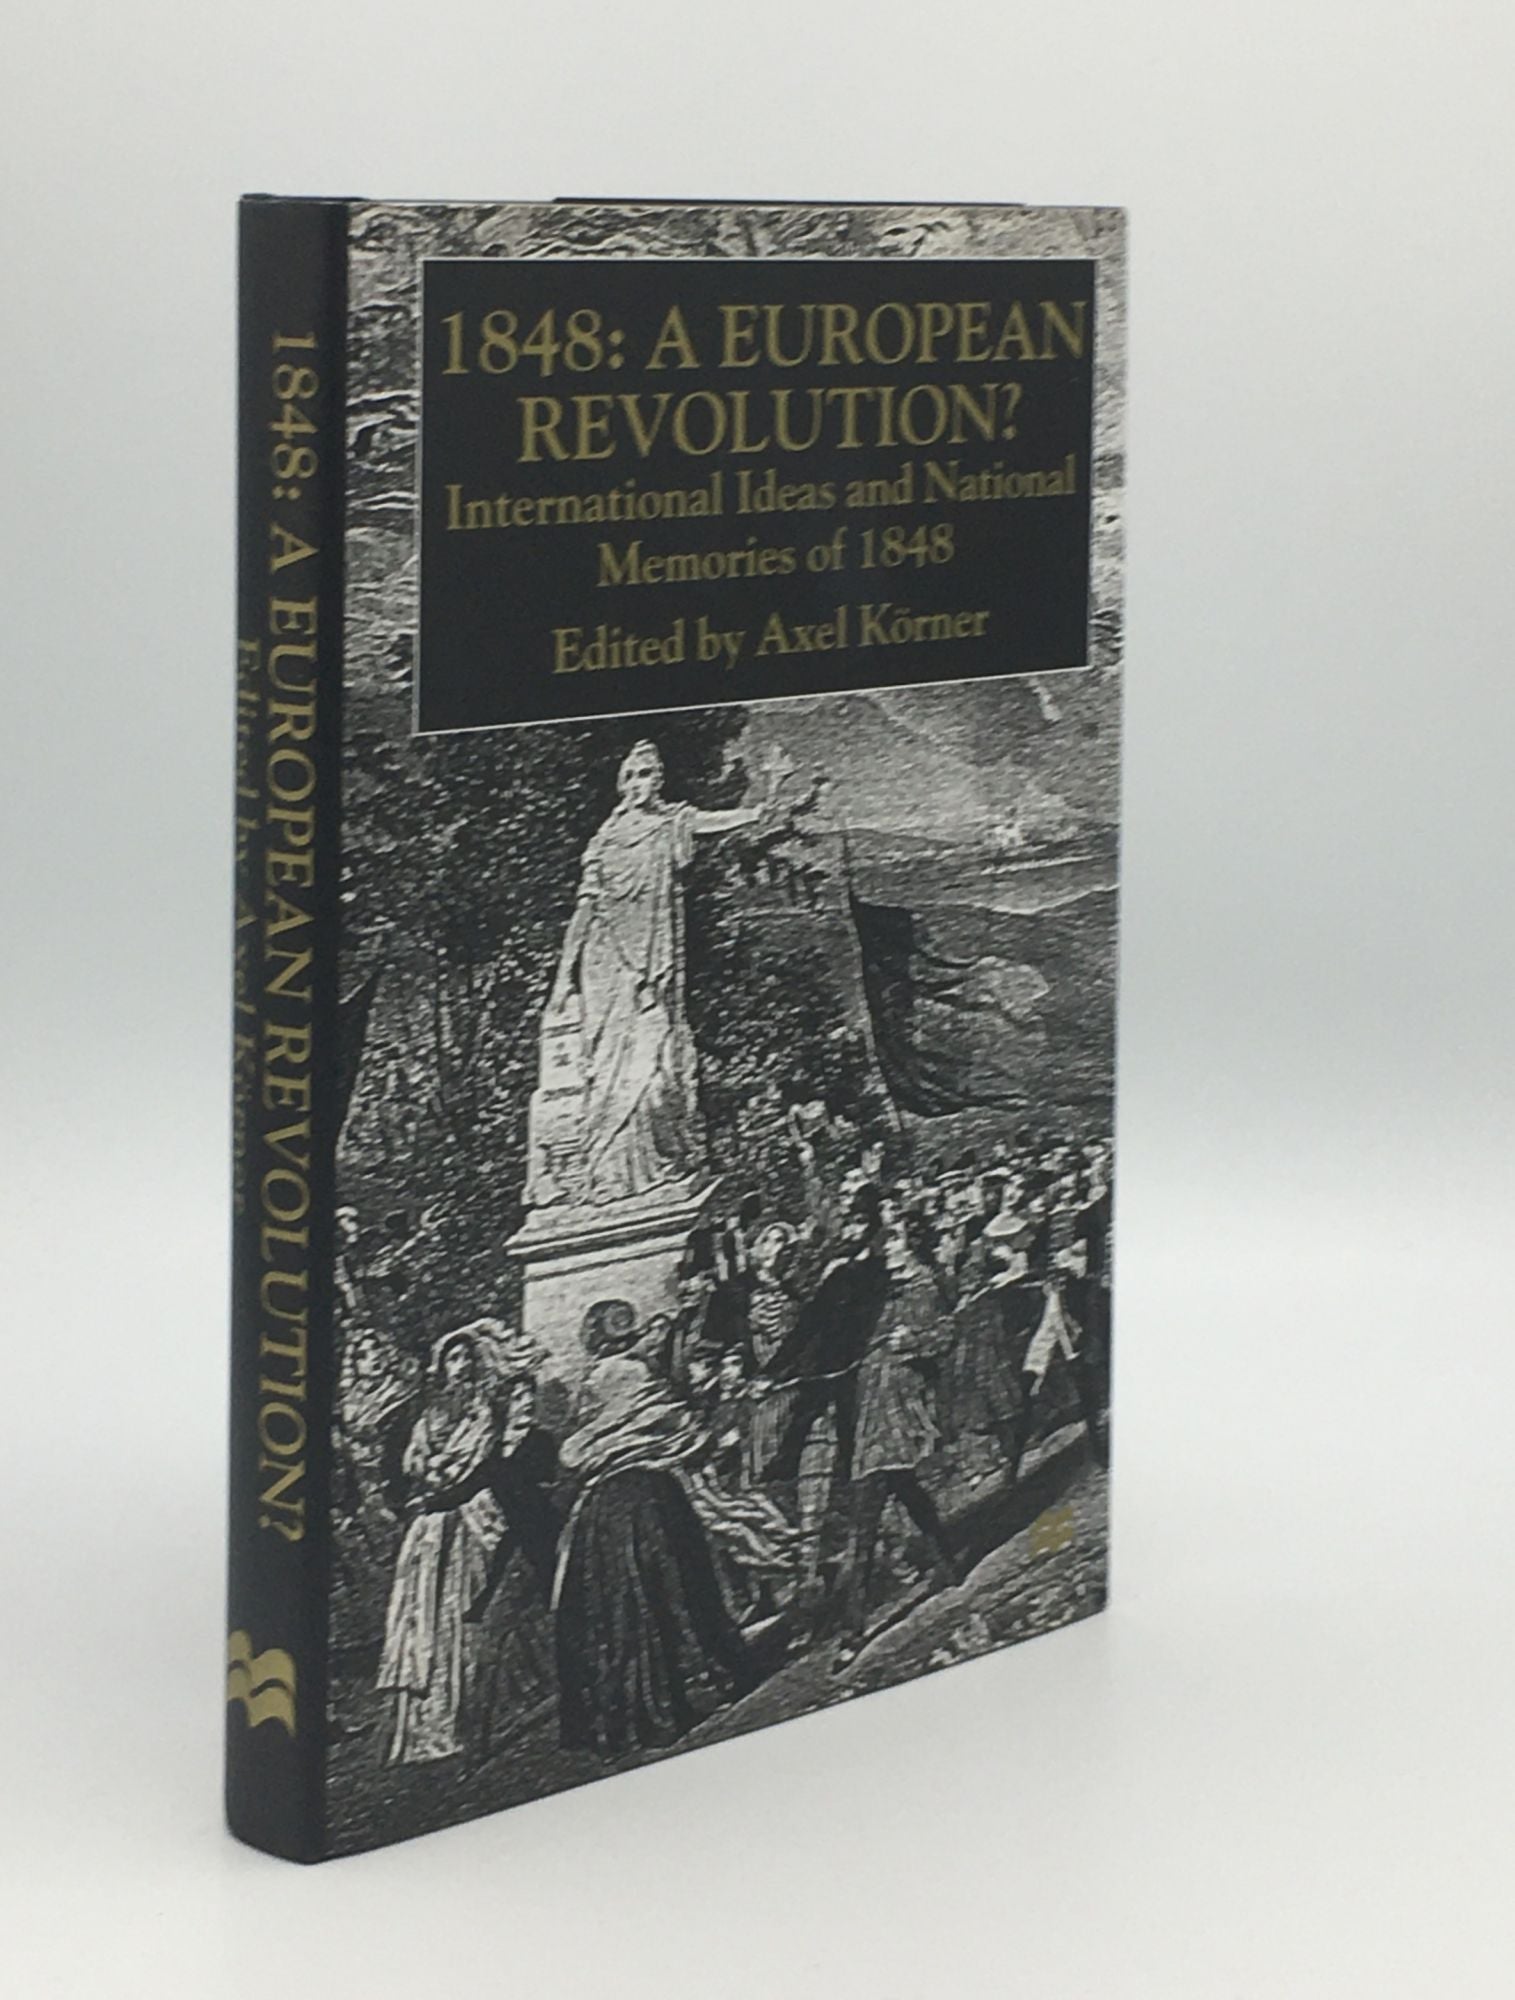 KORNER Axel - 1848 a European Revolution? International Ideas and National Memories of 1848